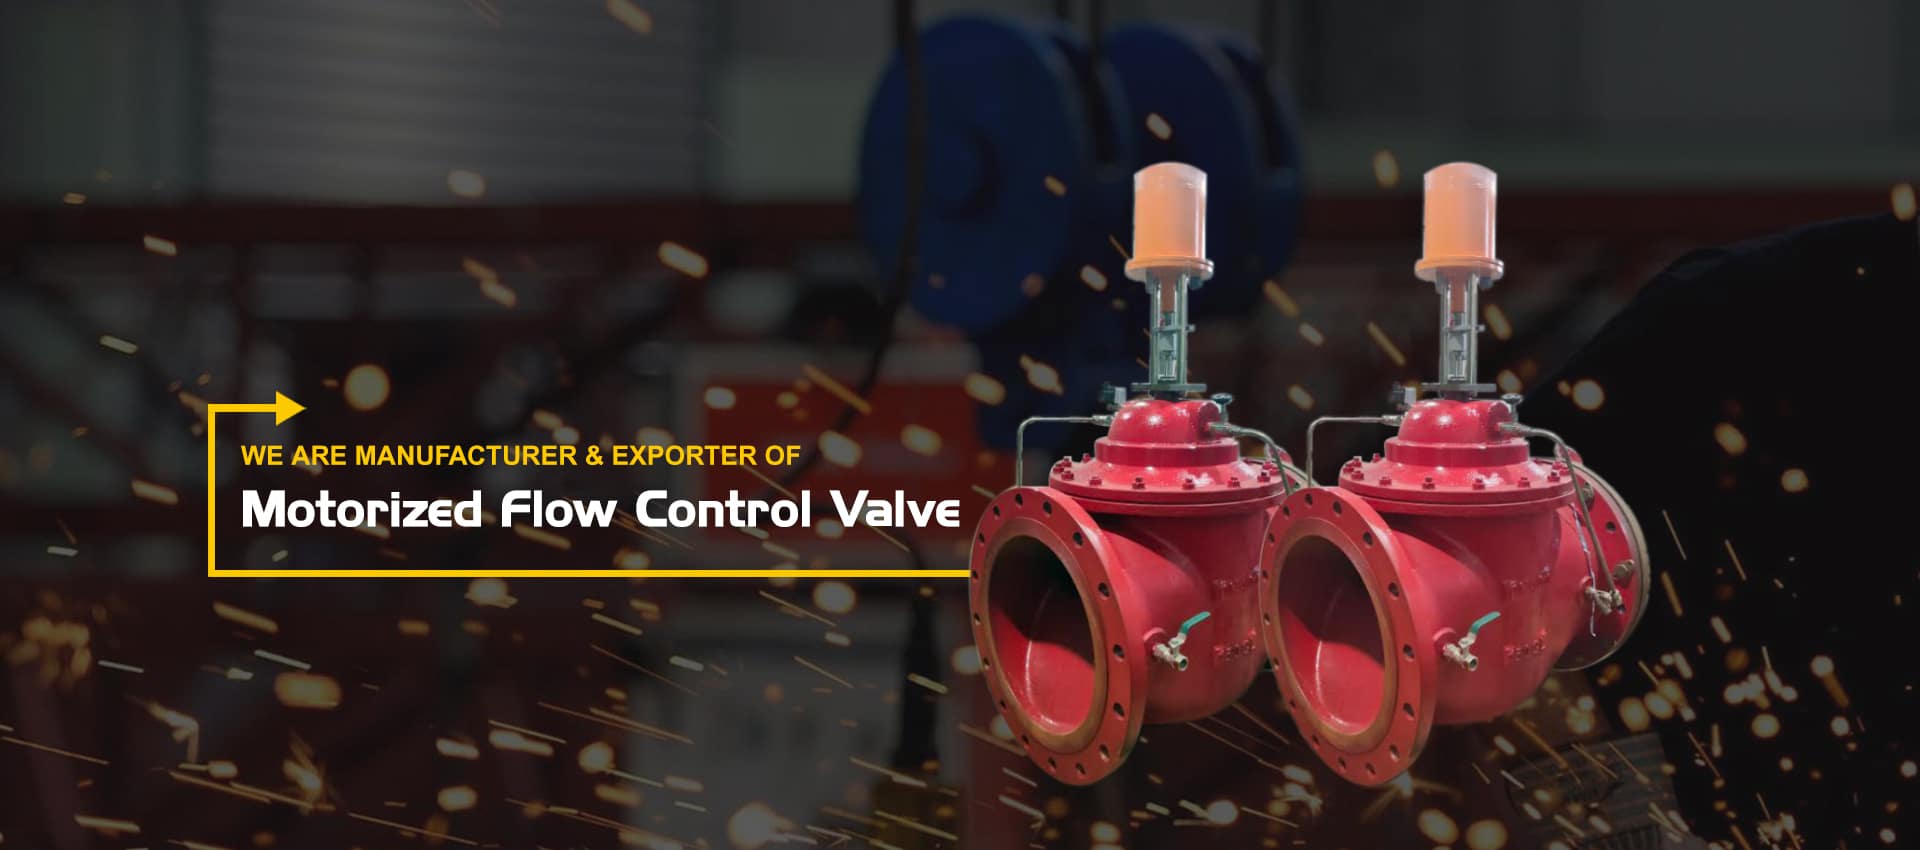 Motorized Flow Control Valve Manufacturer